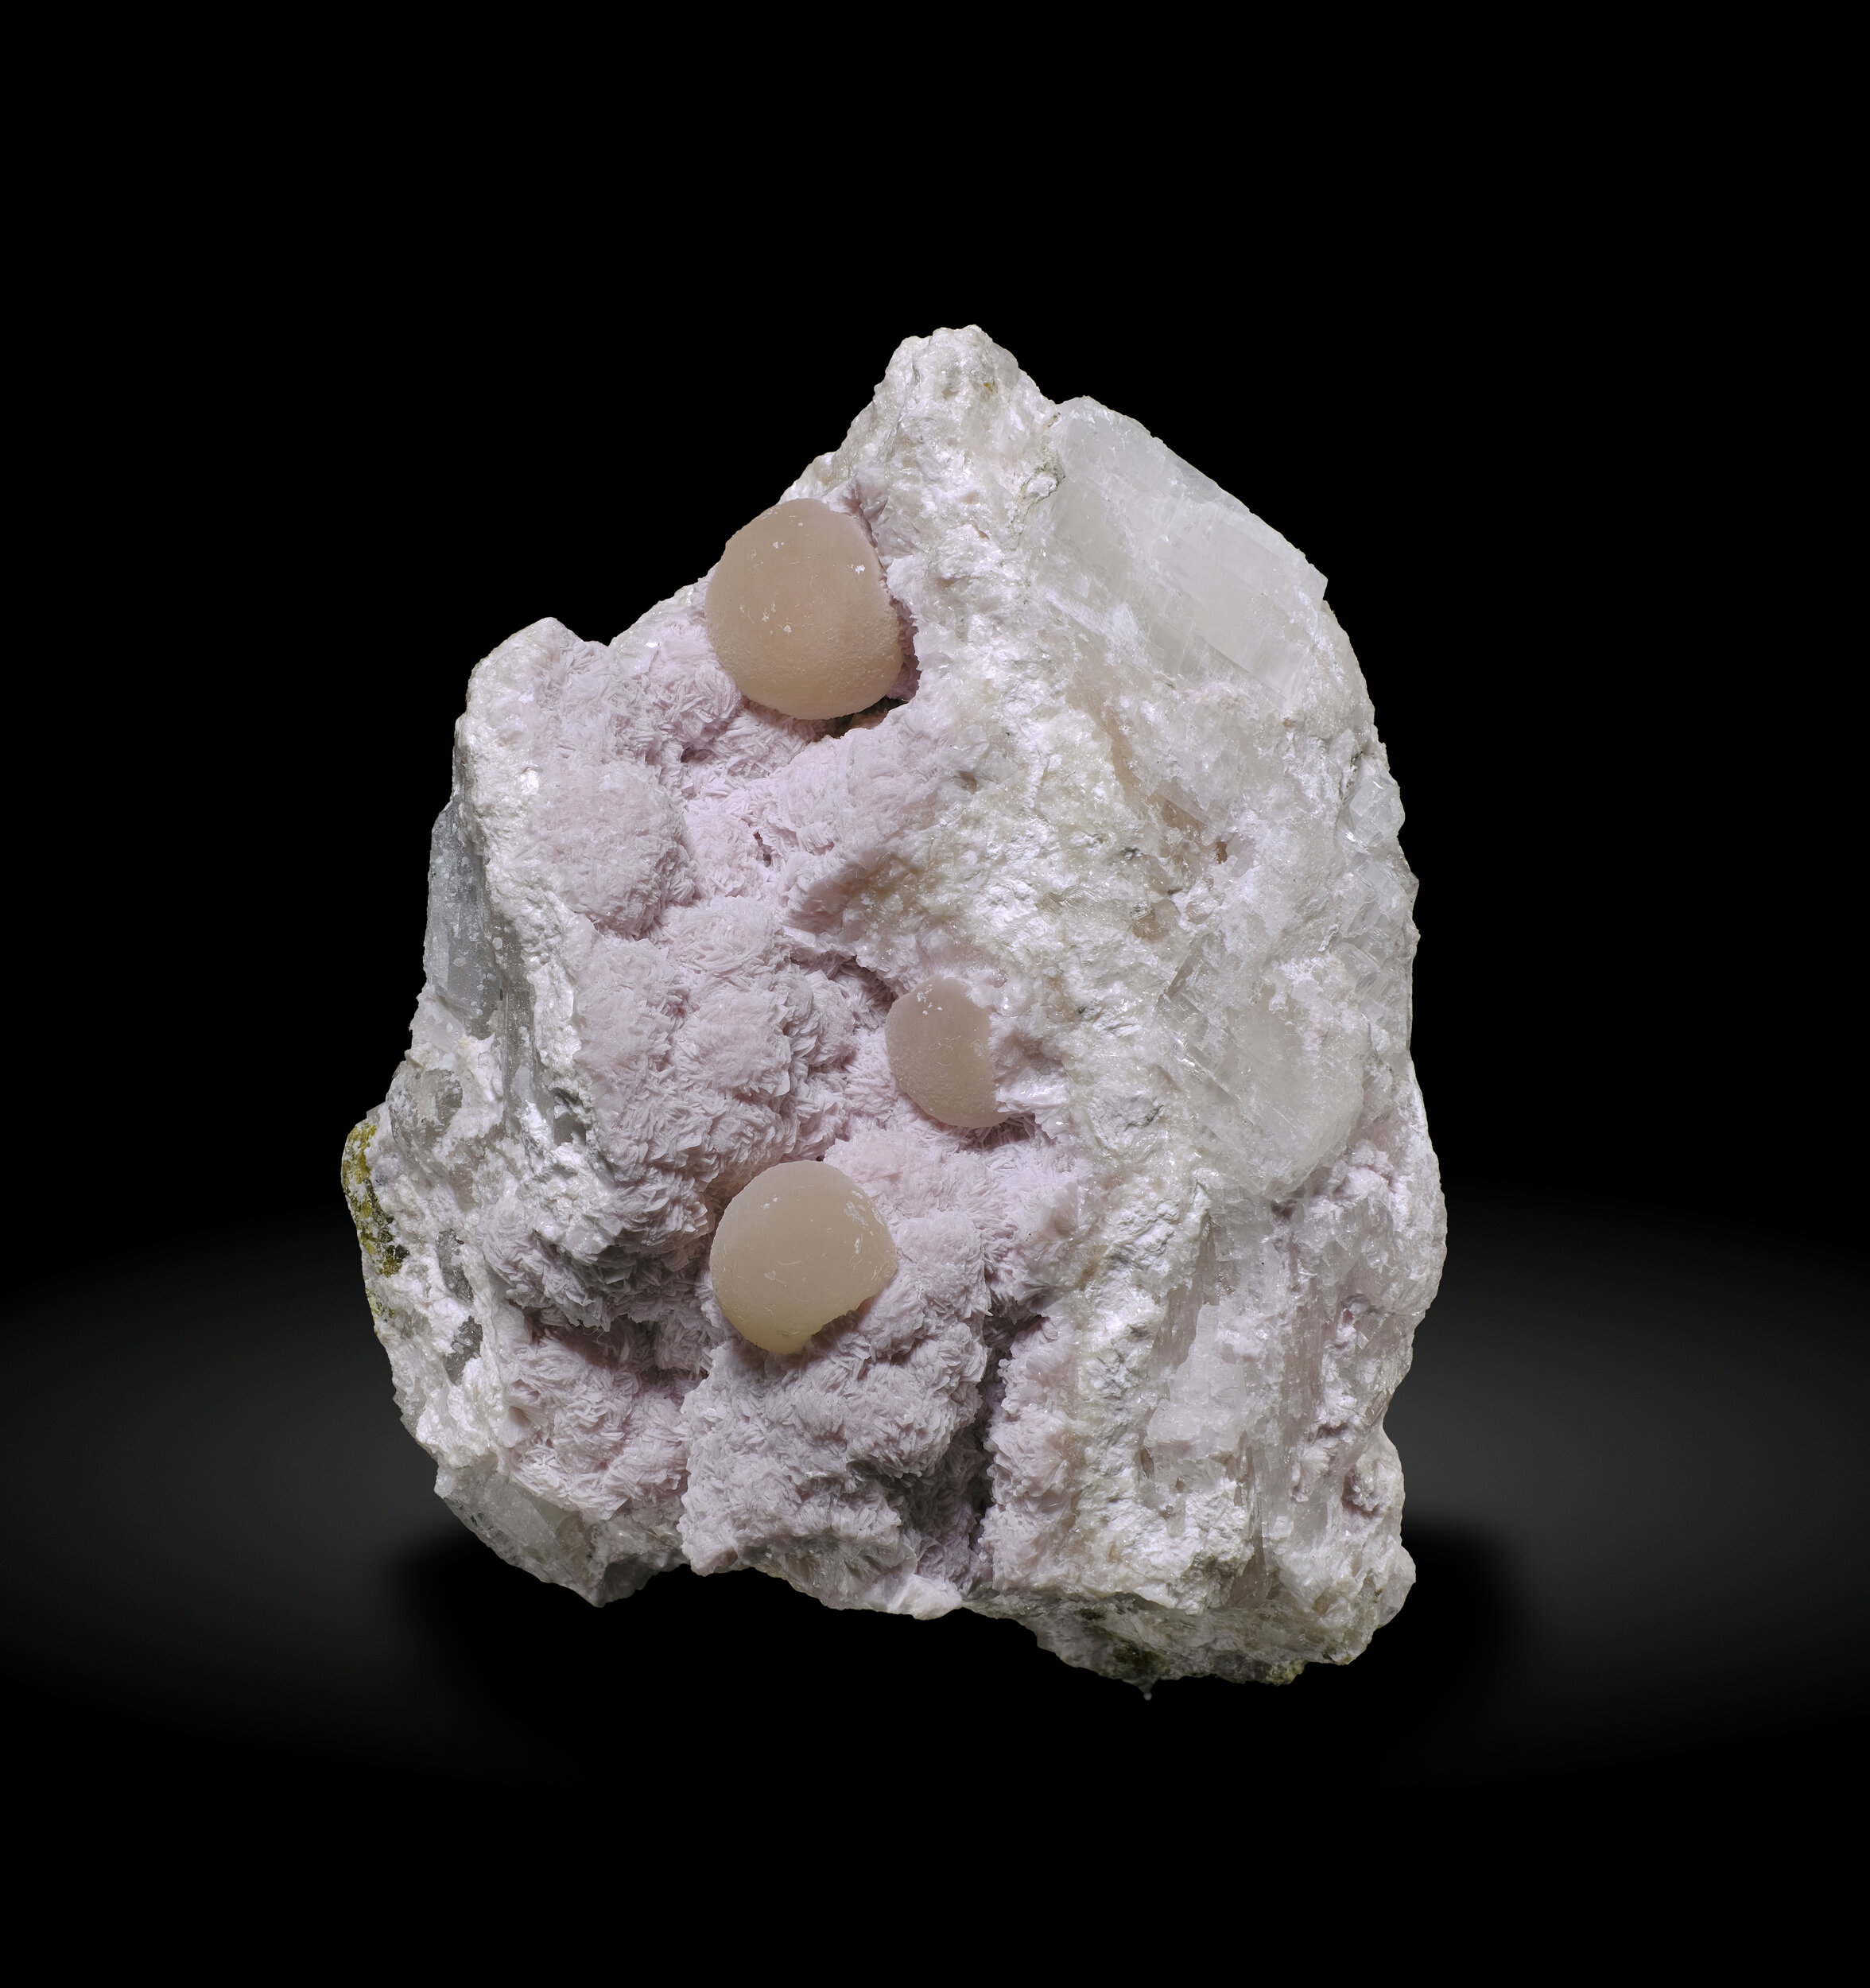 specimens/s_imagesAO2/Bultfonteinite-MLP99AO2_5794_f.jpg